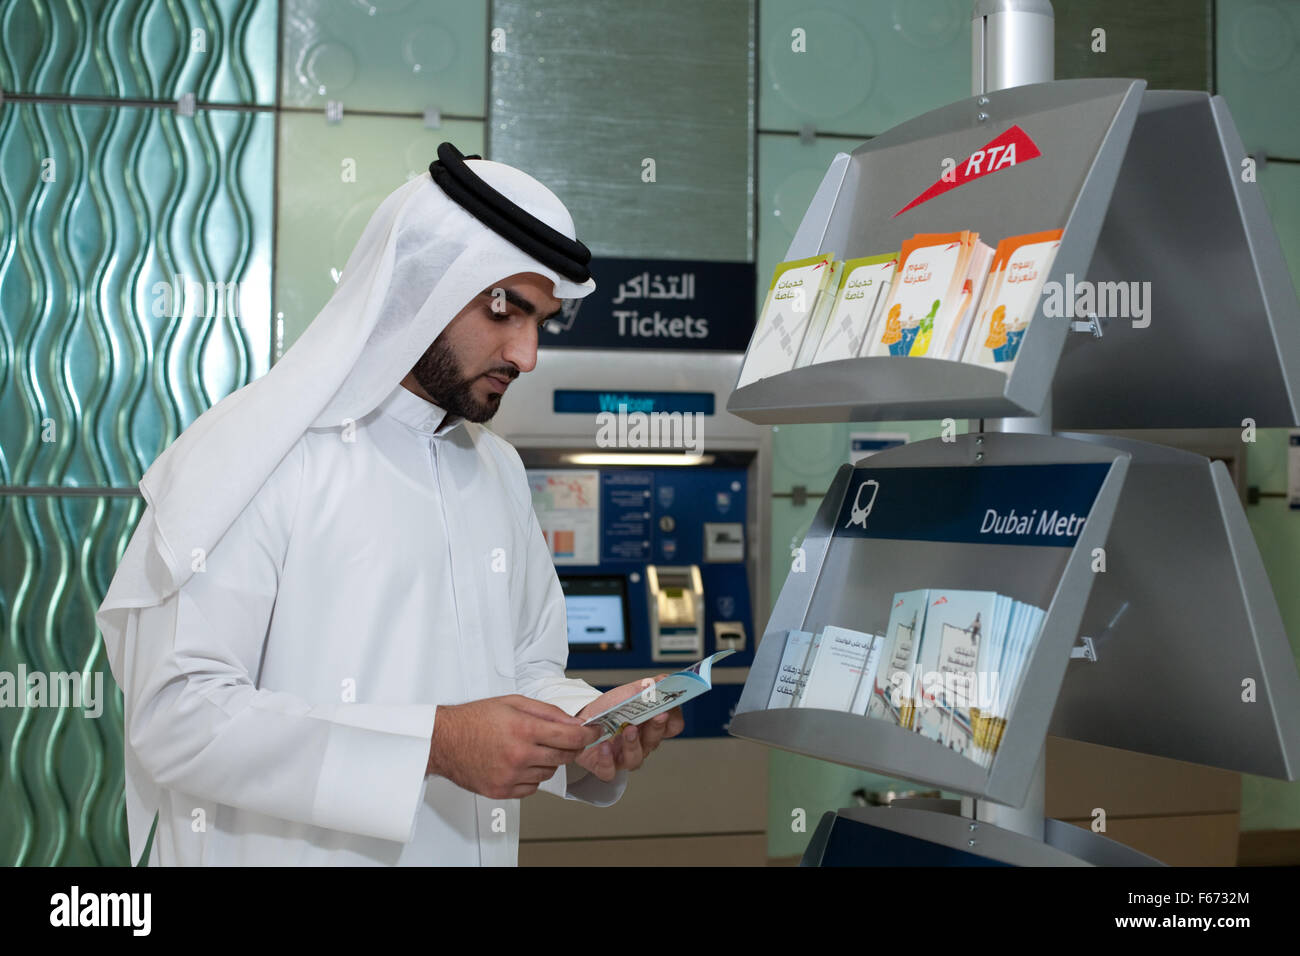 Arab man in Dubai Metro ticket foyer looking at leaflets Stock Photo